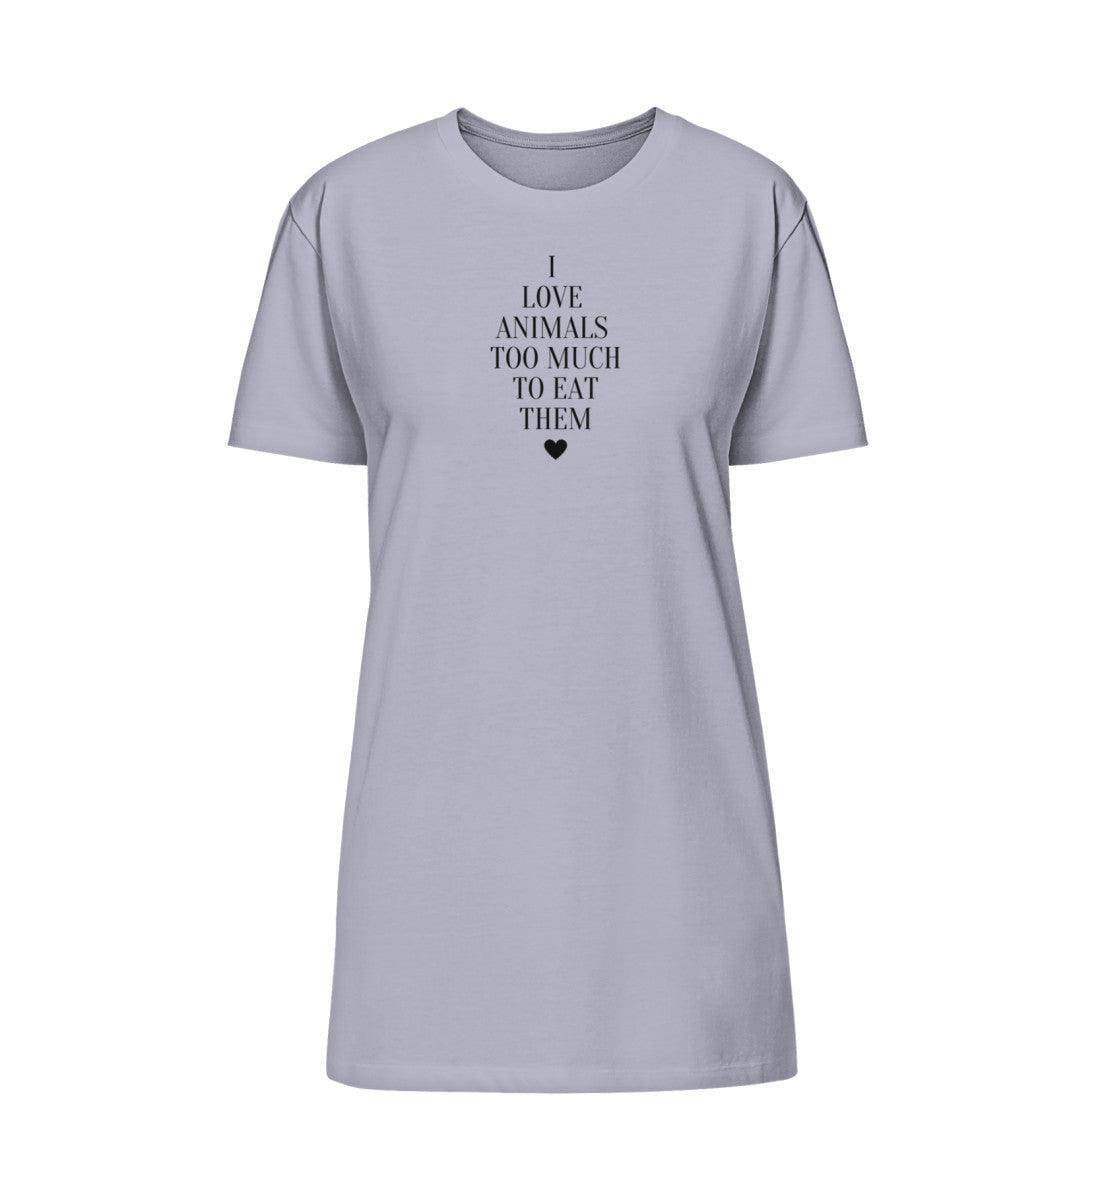 I love animals - T-Shirt Kleid - Team Vegan © vegan t shirt